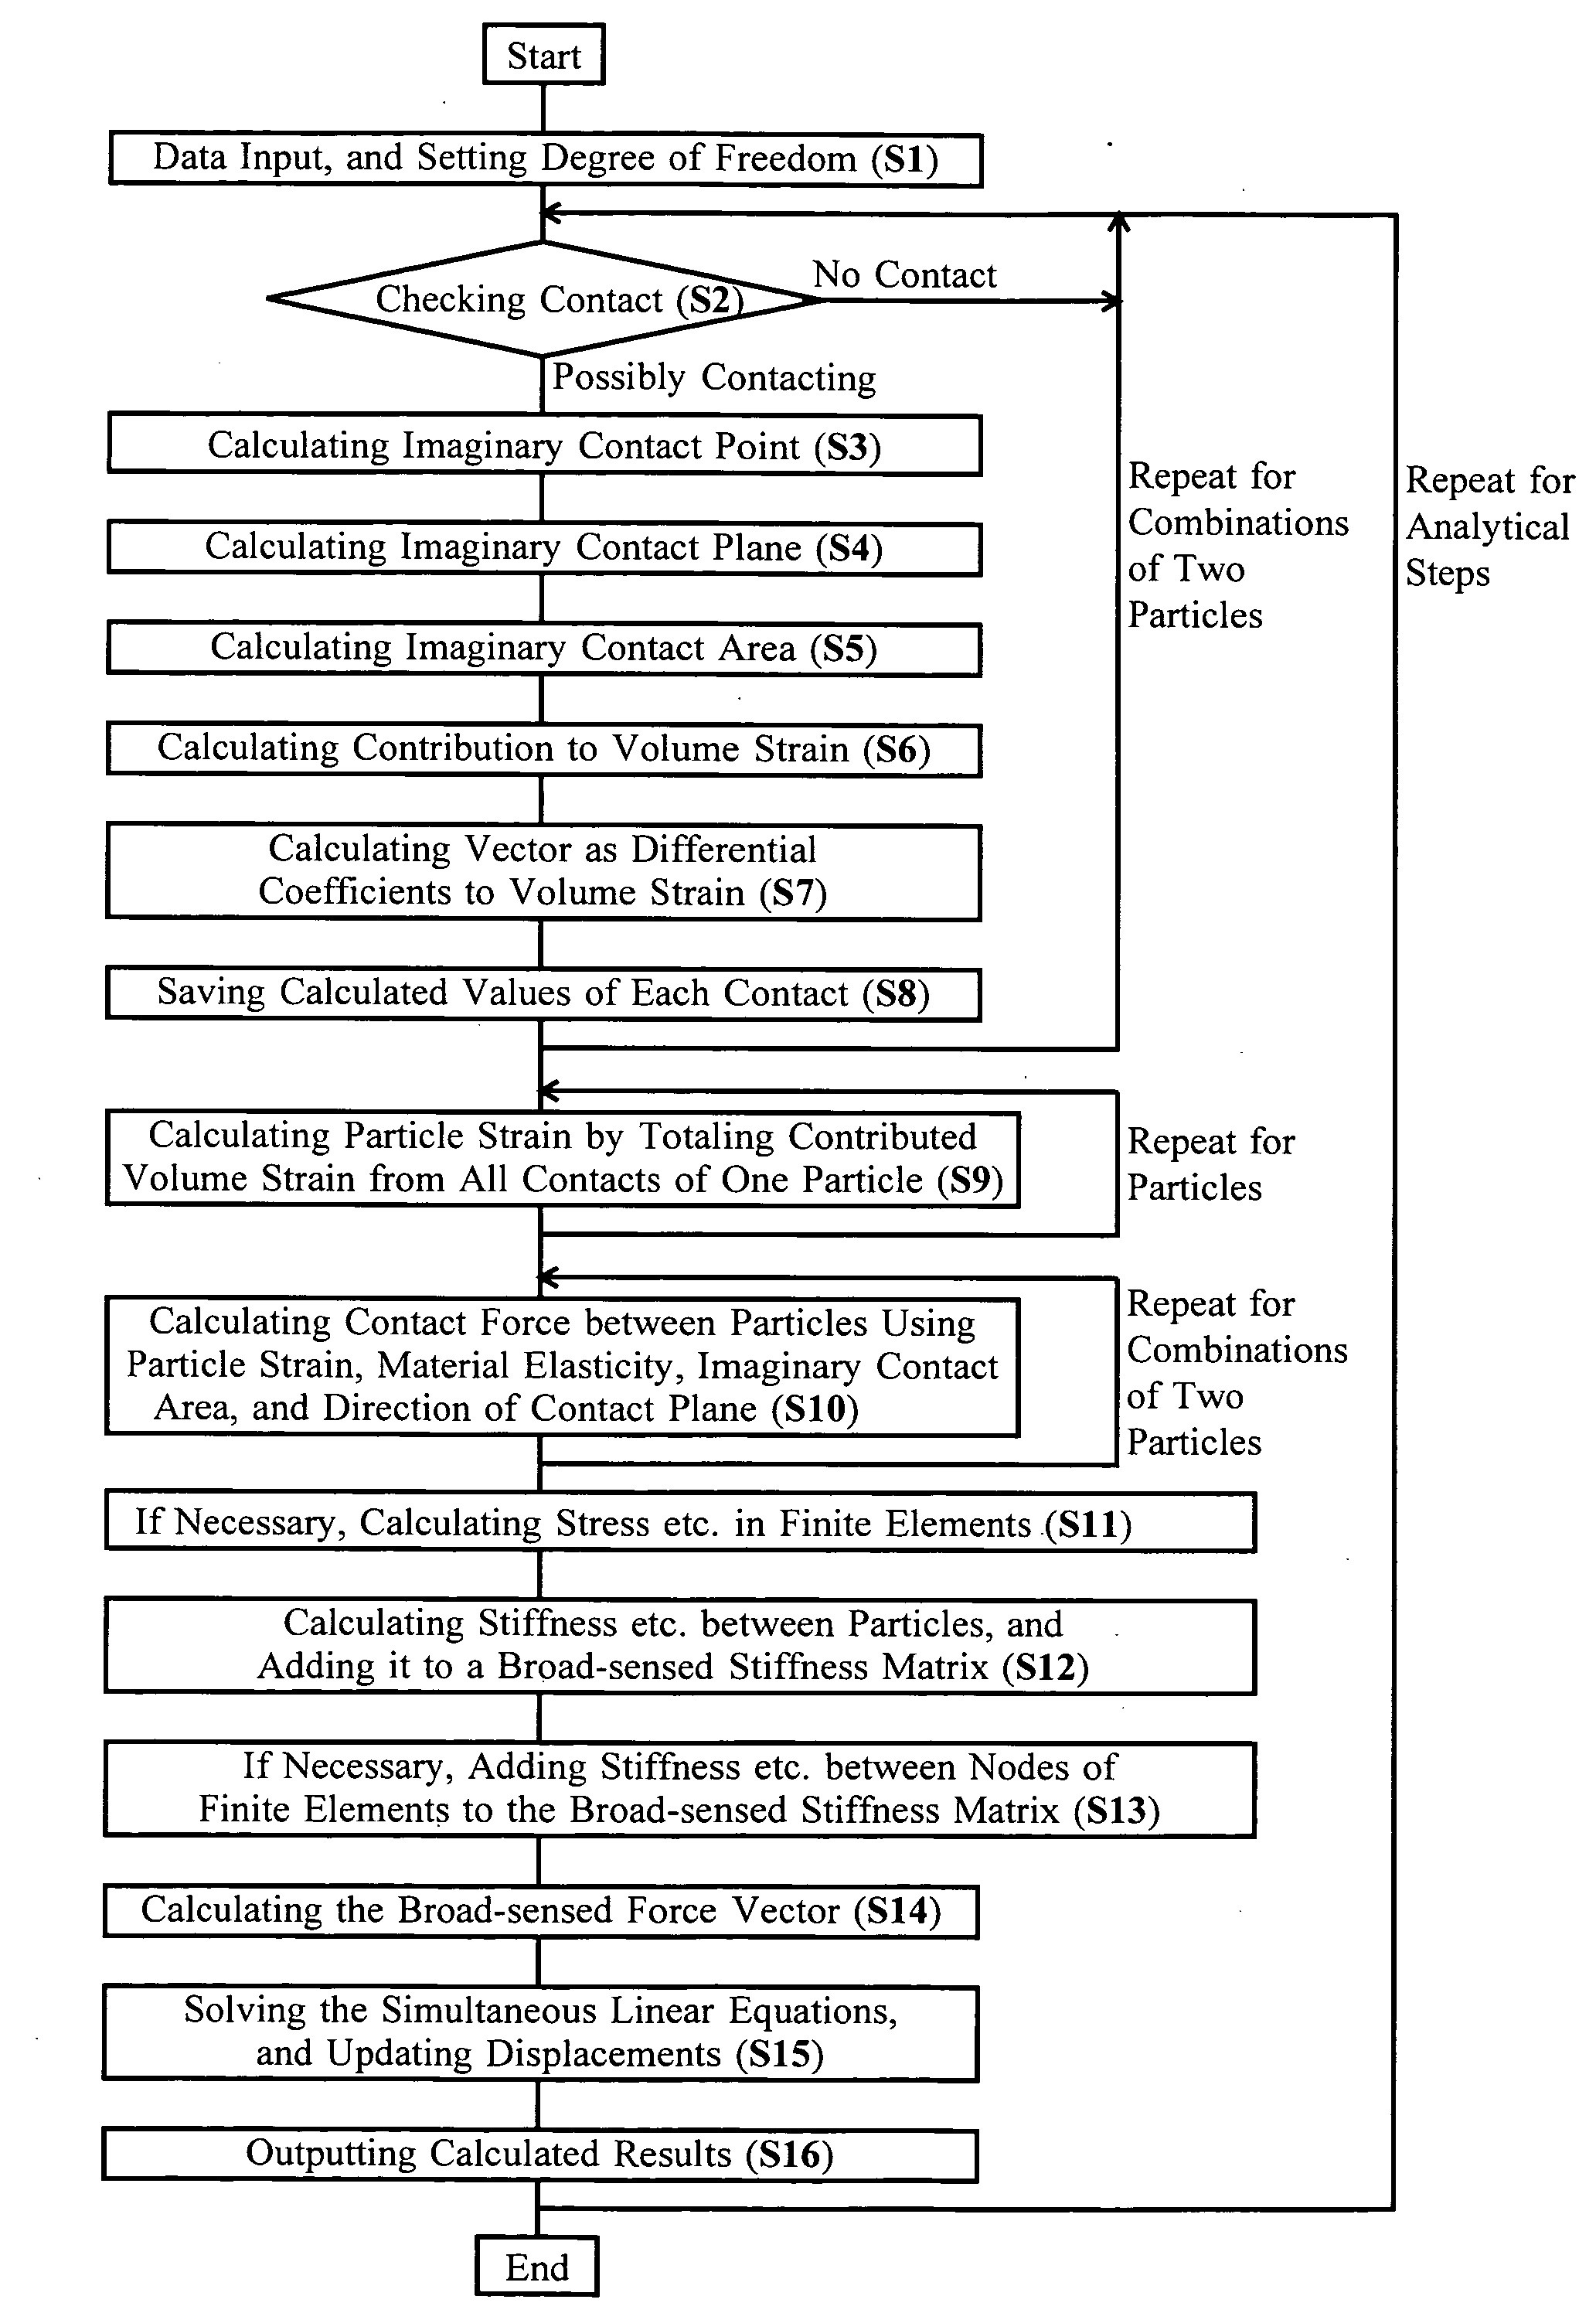 Computer program using particle method